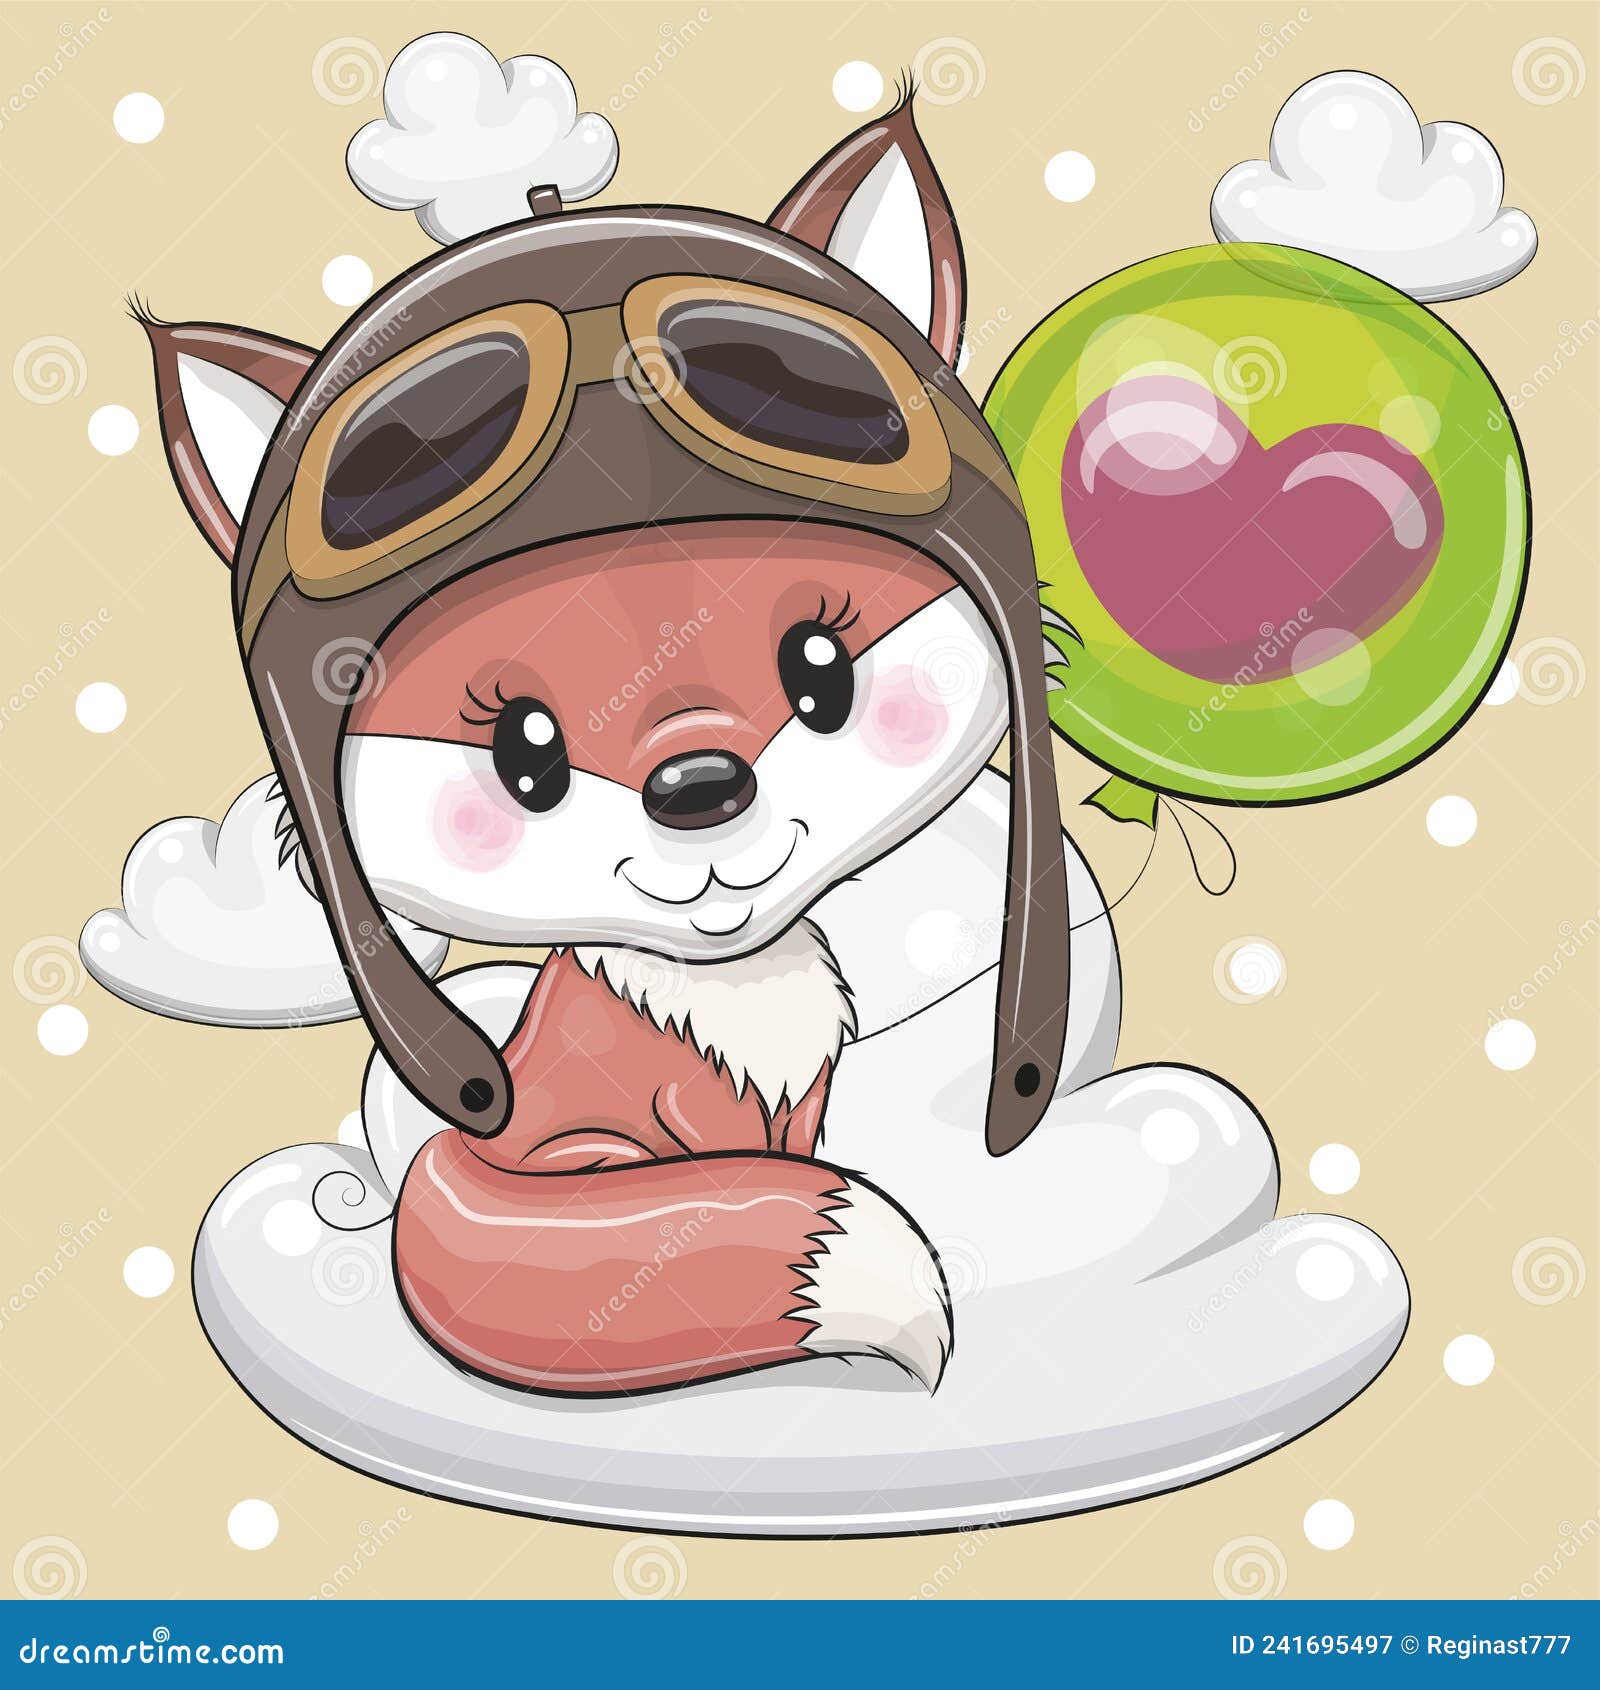 cute cartoon fox in a pilot hat with green balloon on a cloud